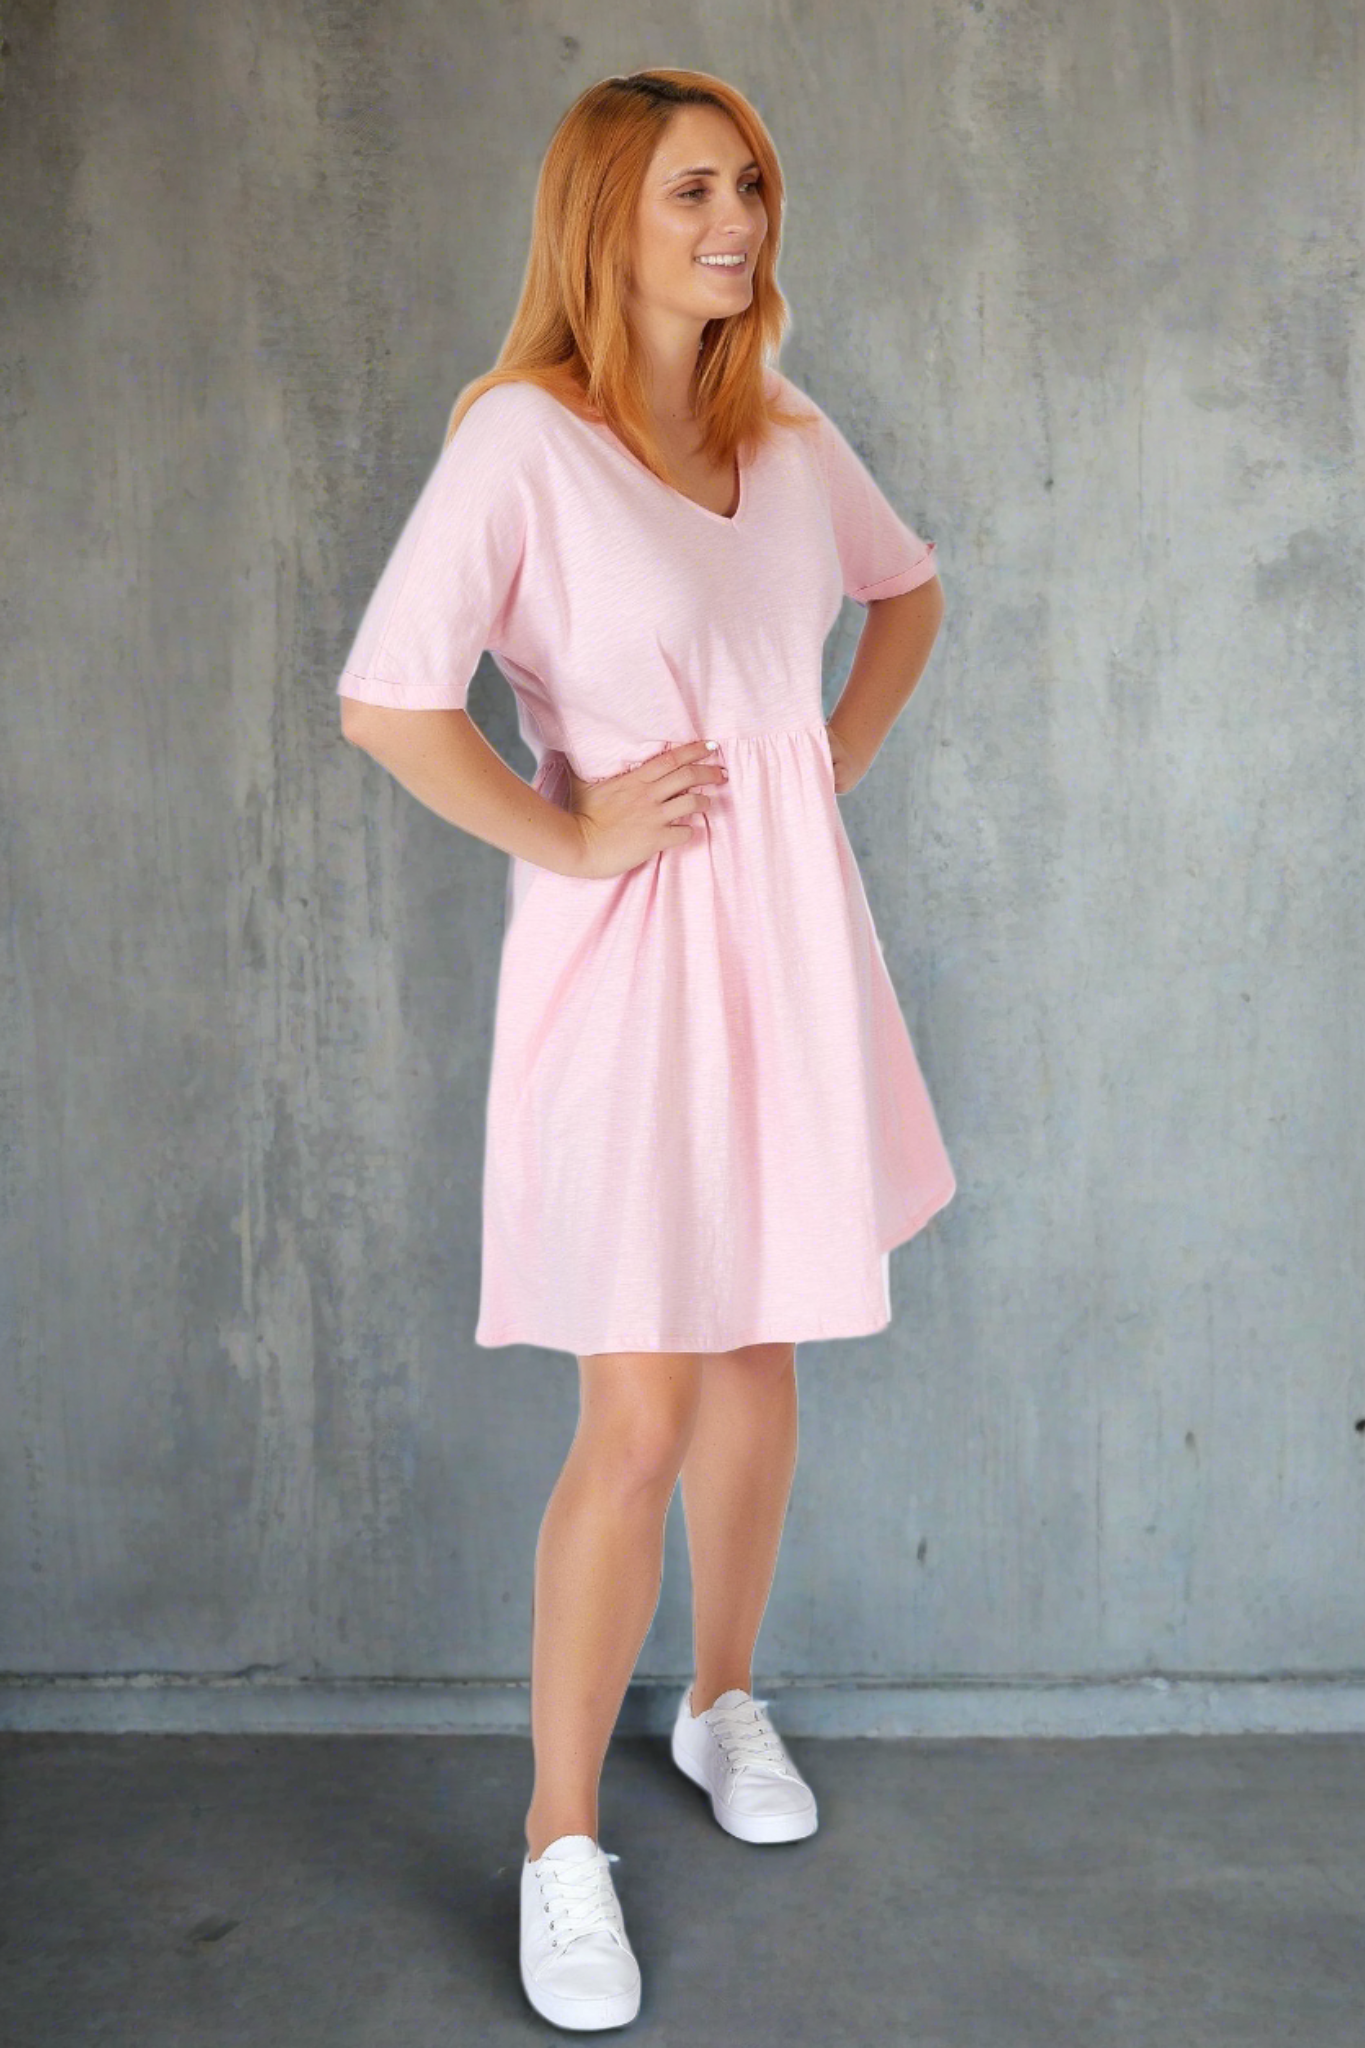 Betty Basics Portsea Dress in Ballet Pink - Hey Sara